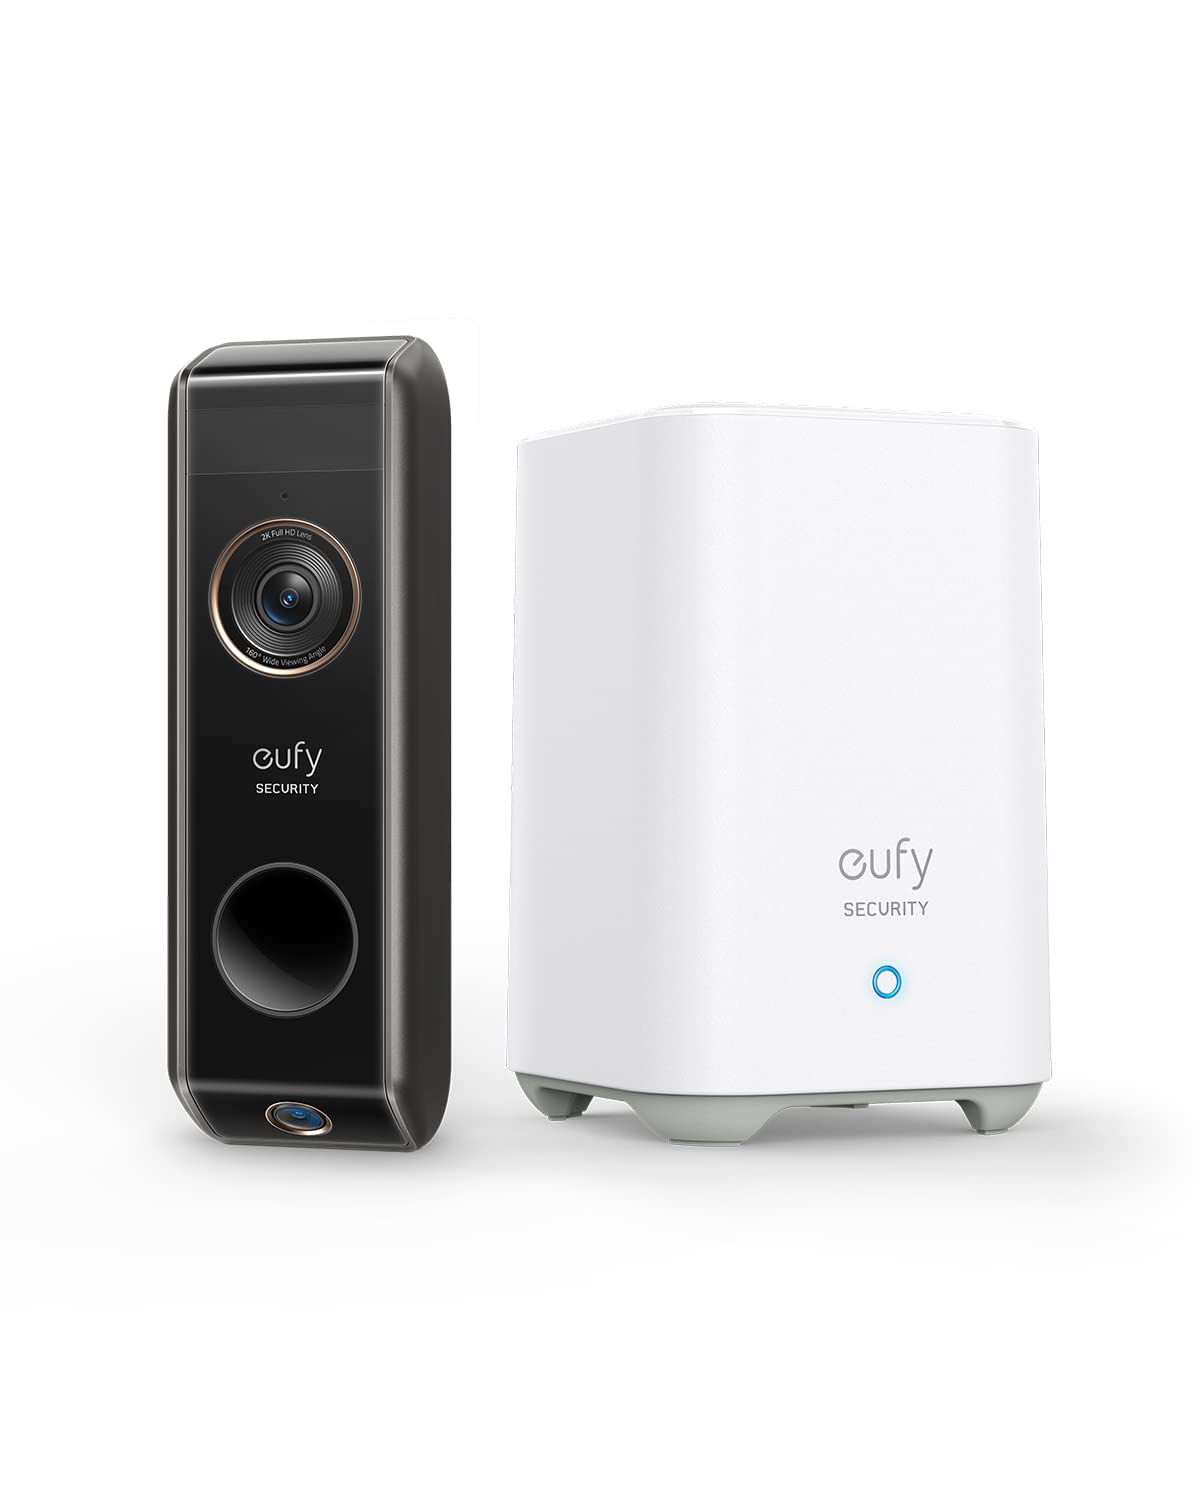 Eufy Security Video Doorbell Dual Camera $259.99